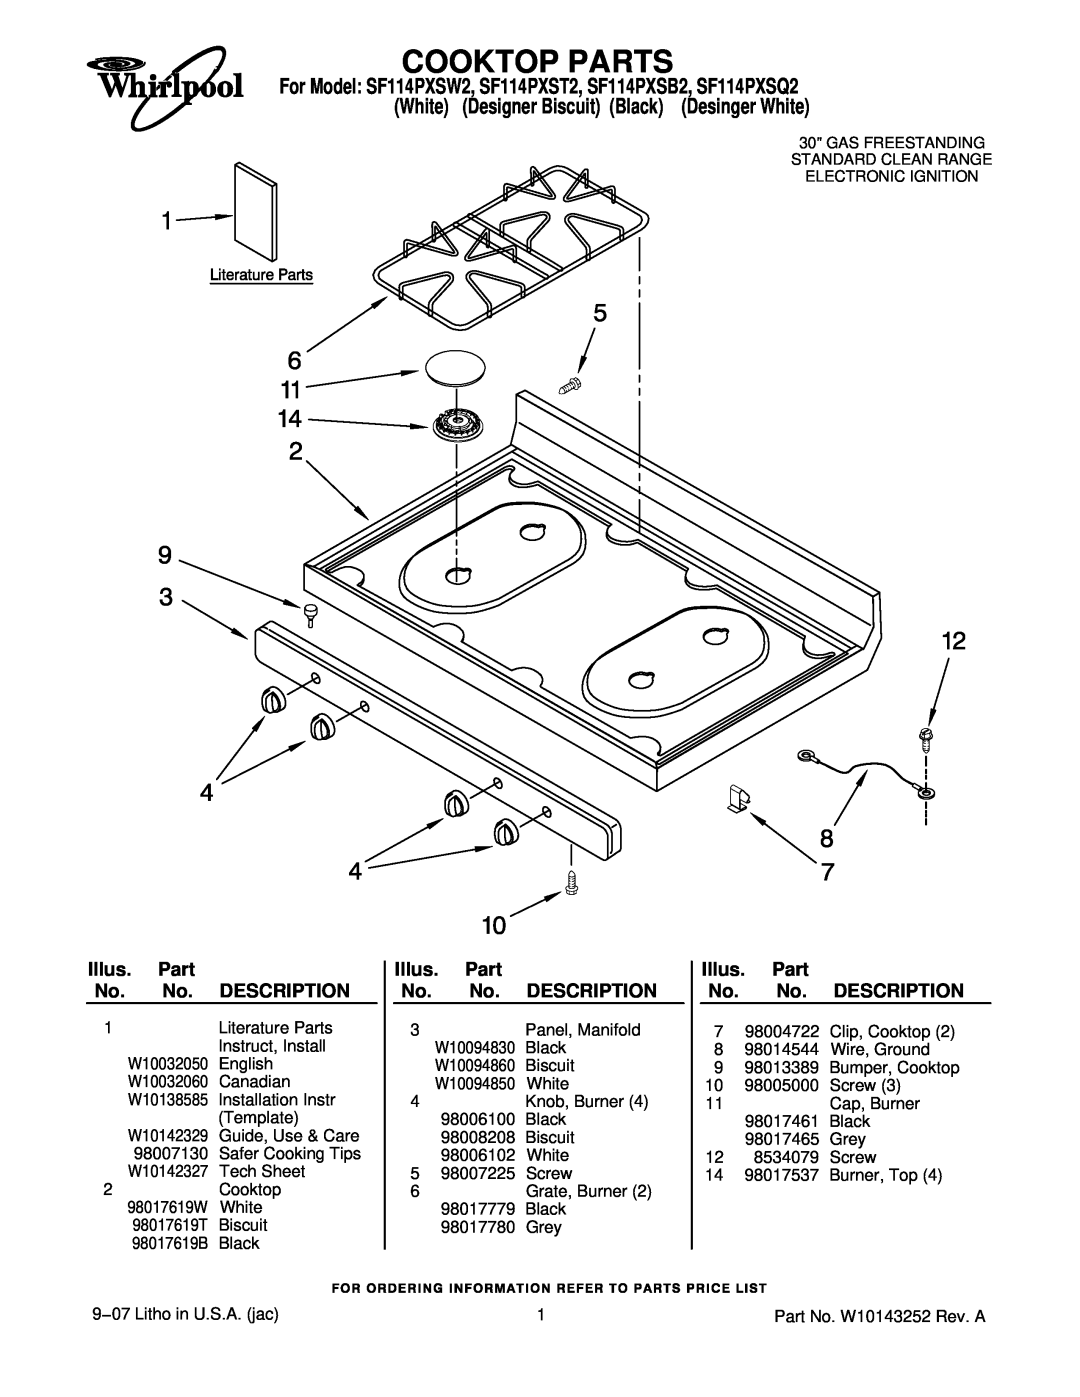 Whirlpool SF114PXSQ2, SF114PXSW2, SF114PXST2 manual Cooktop Parts, Description, Illus. Part No. No. DESCRIPTION 